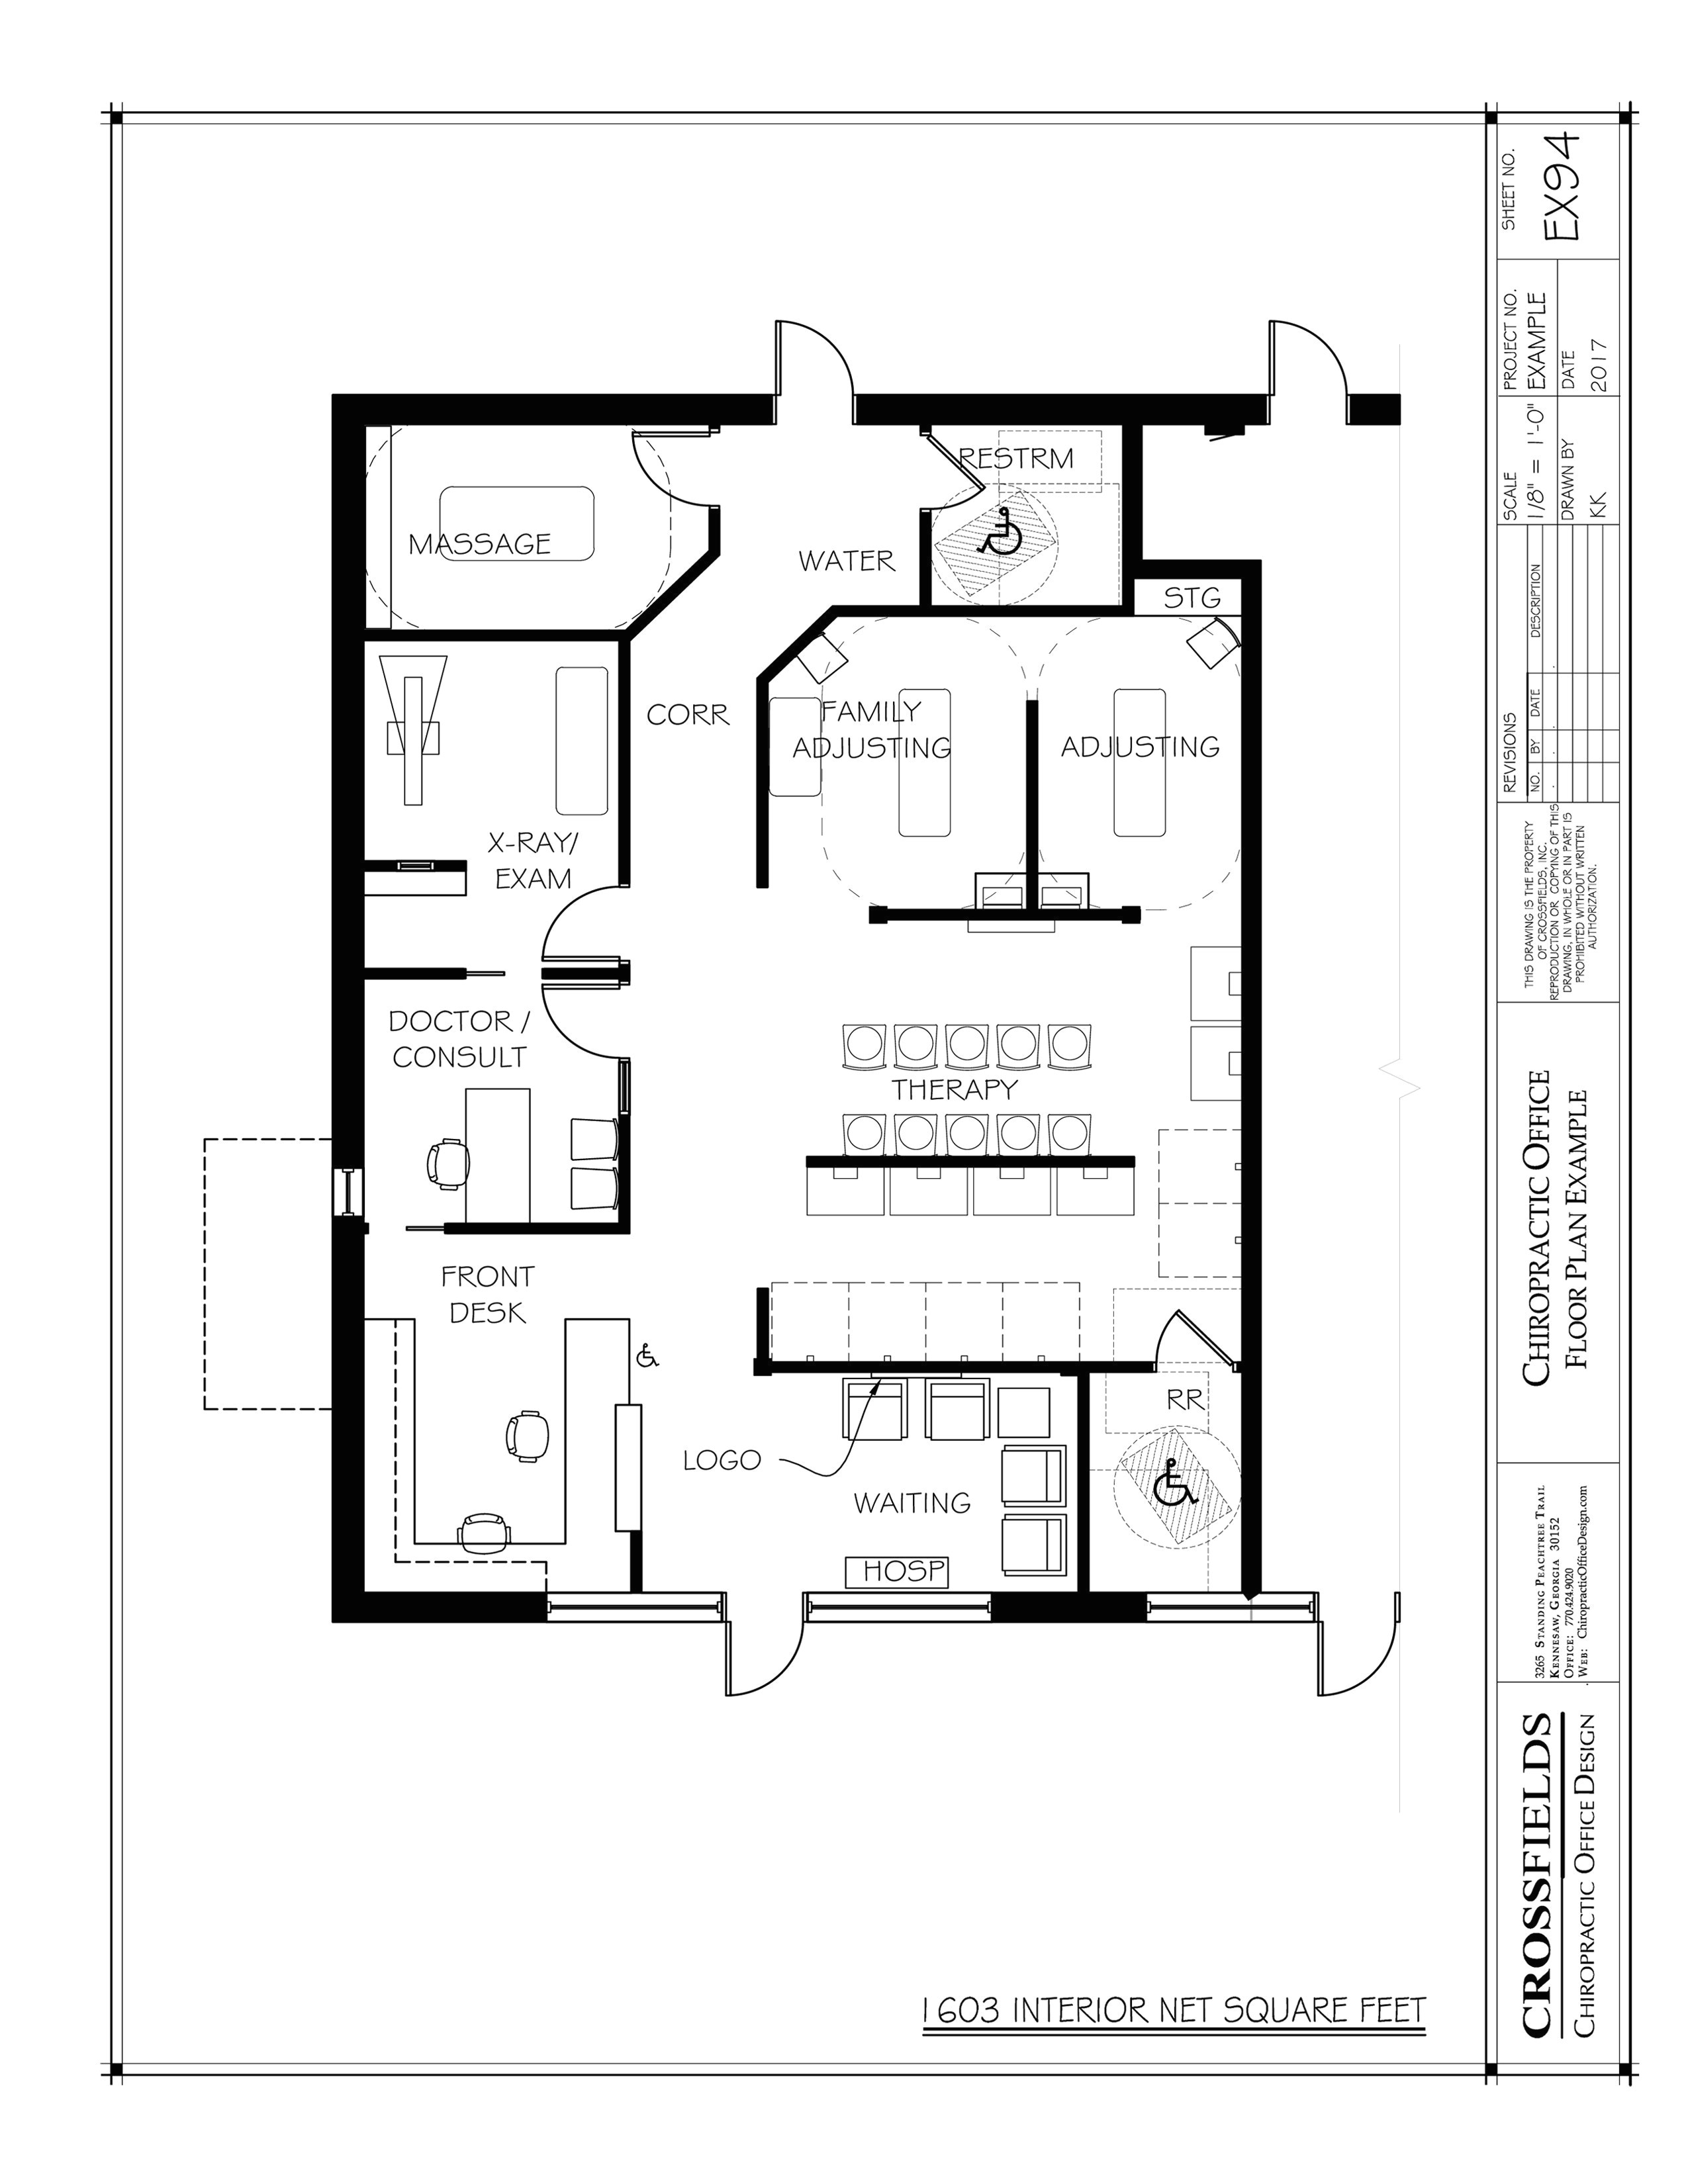 drawing floor plans luxury sketchup house plans unique home plans 0d